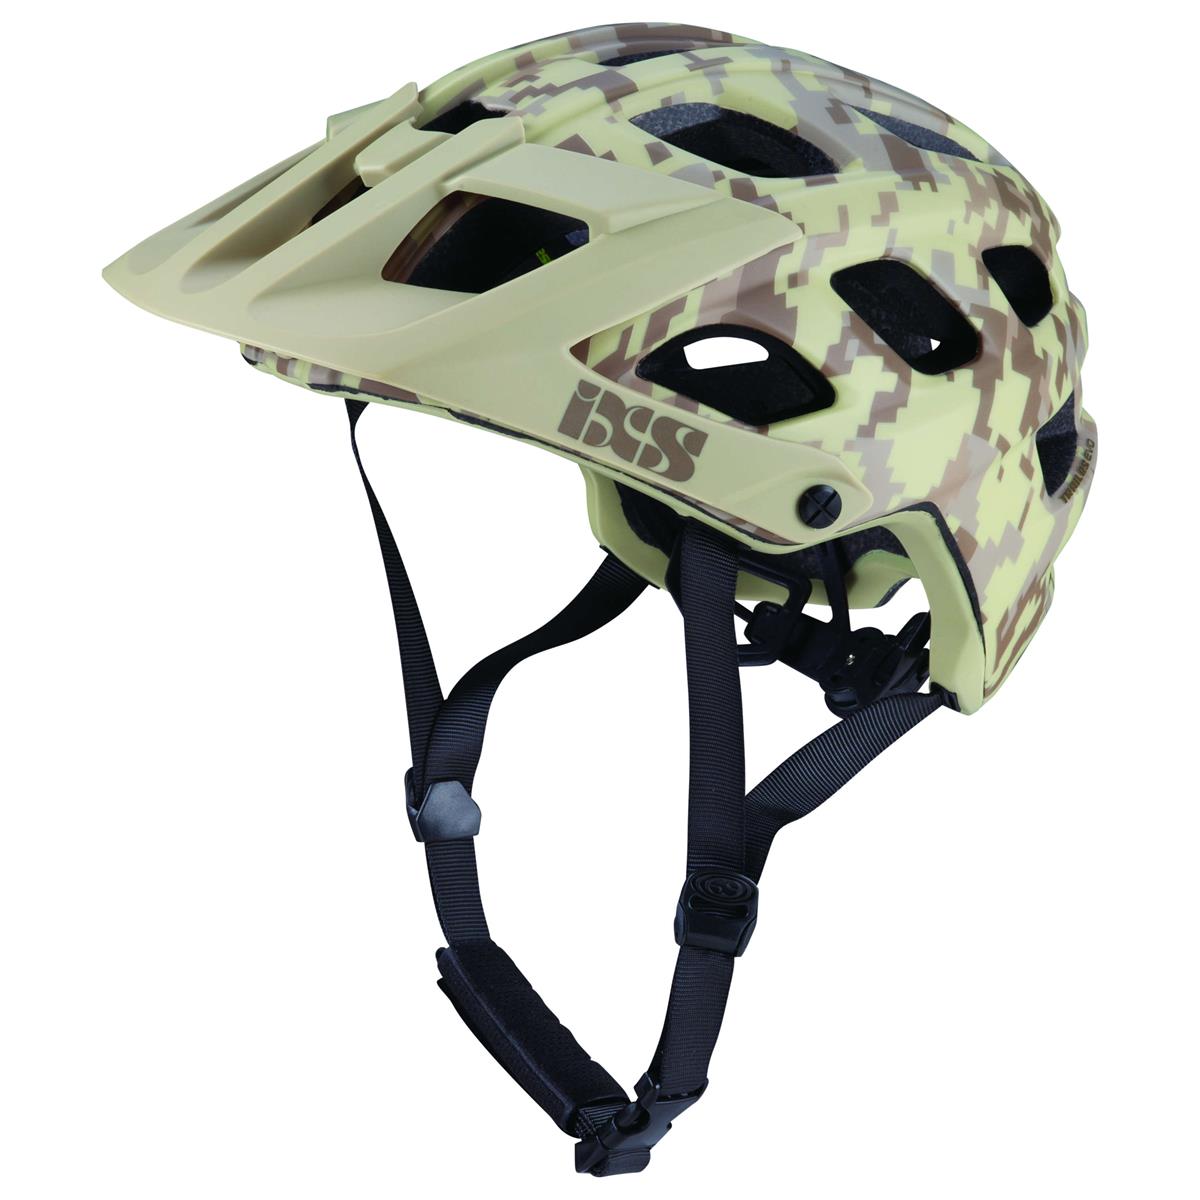 IXS Enduro MTB Helmet Trail RS EVO Camel - Camo Limited Edition